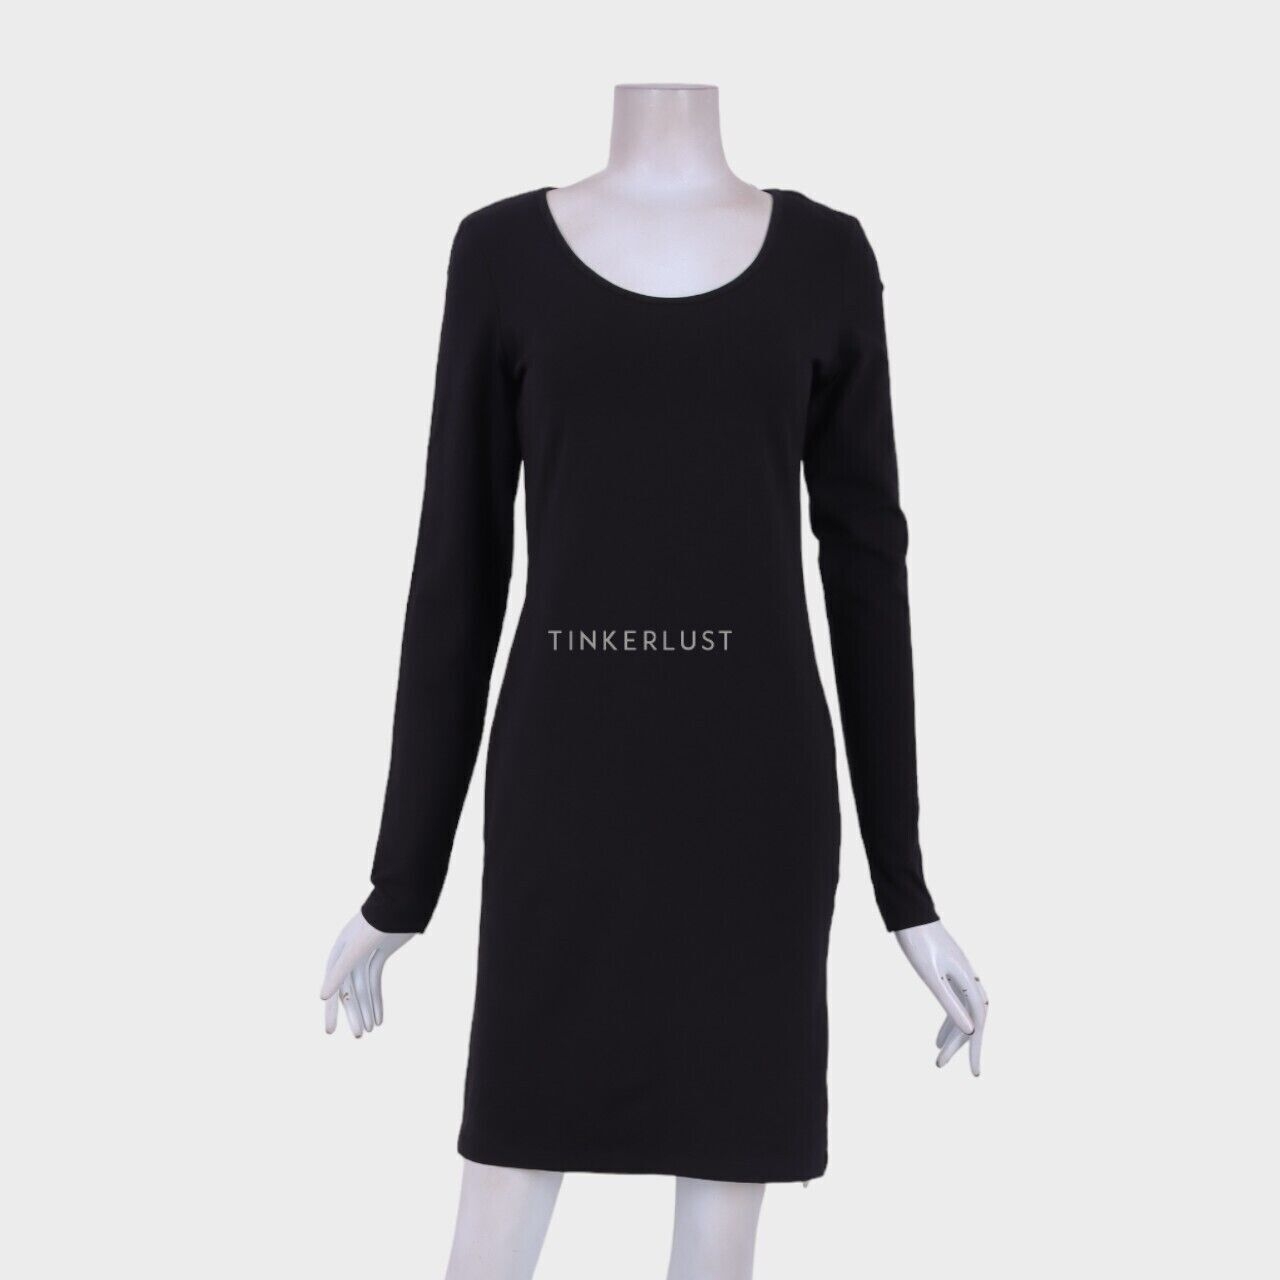 H&M Black Mini Dress